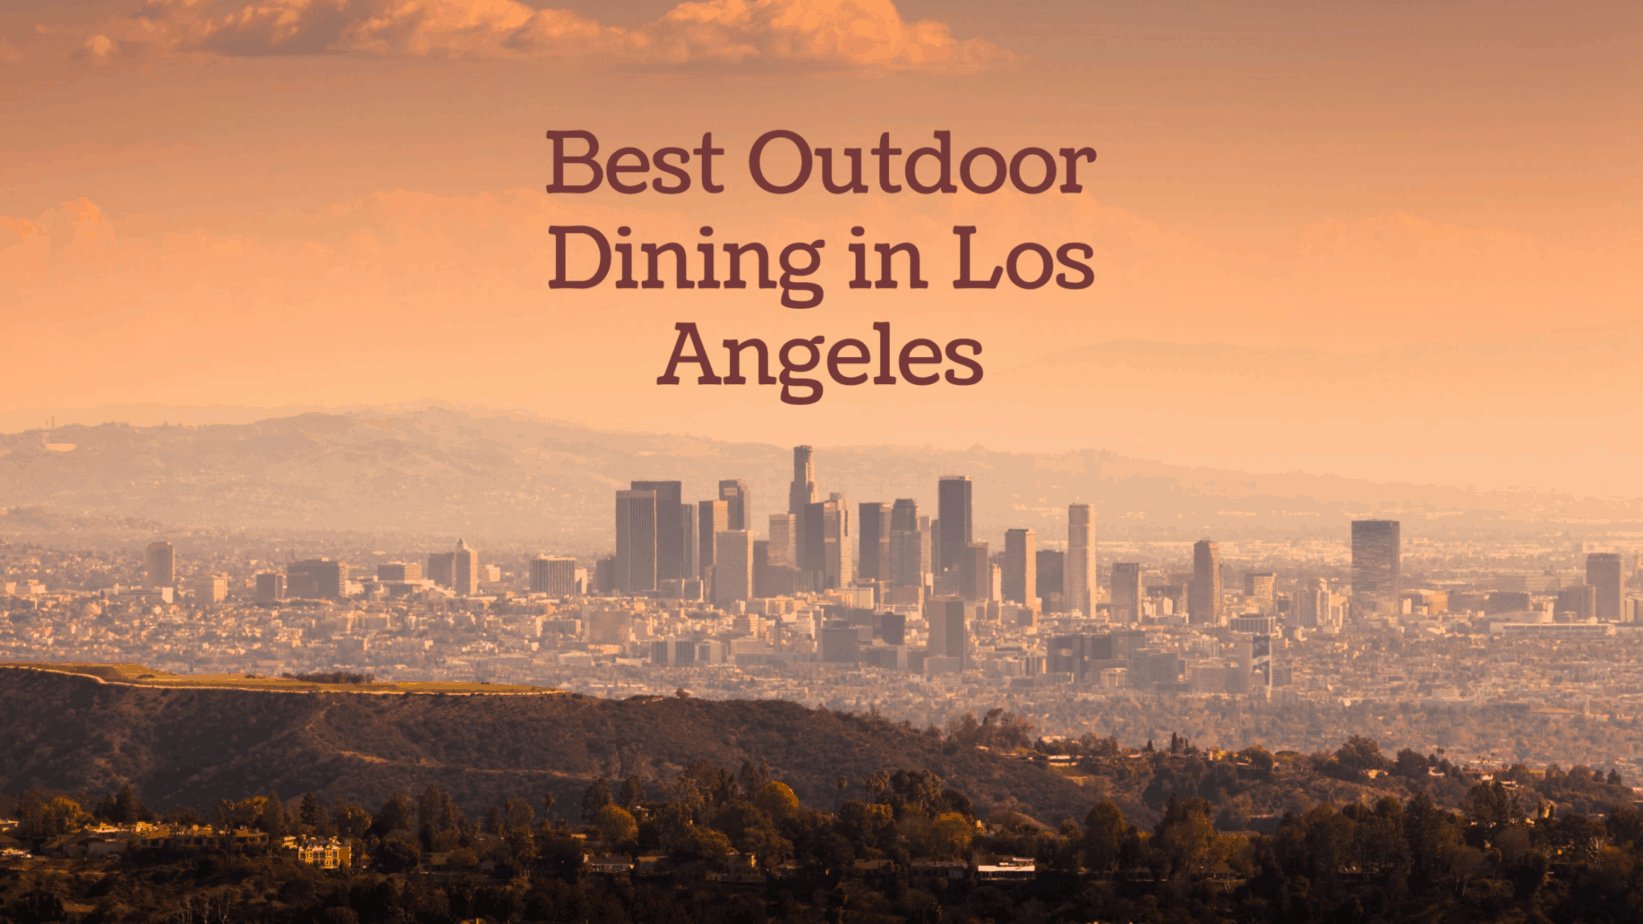 Best Outdoor Dining in Los Angeles